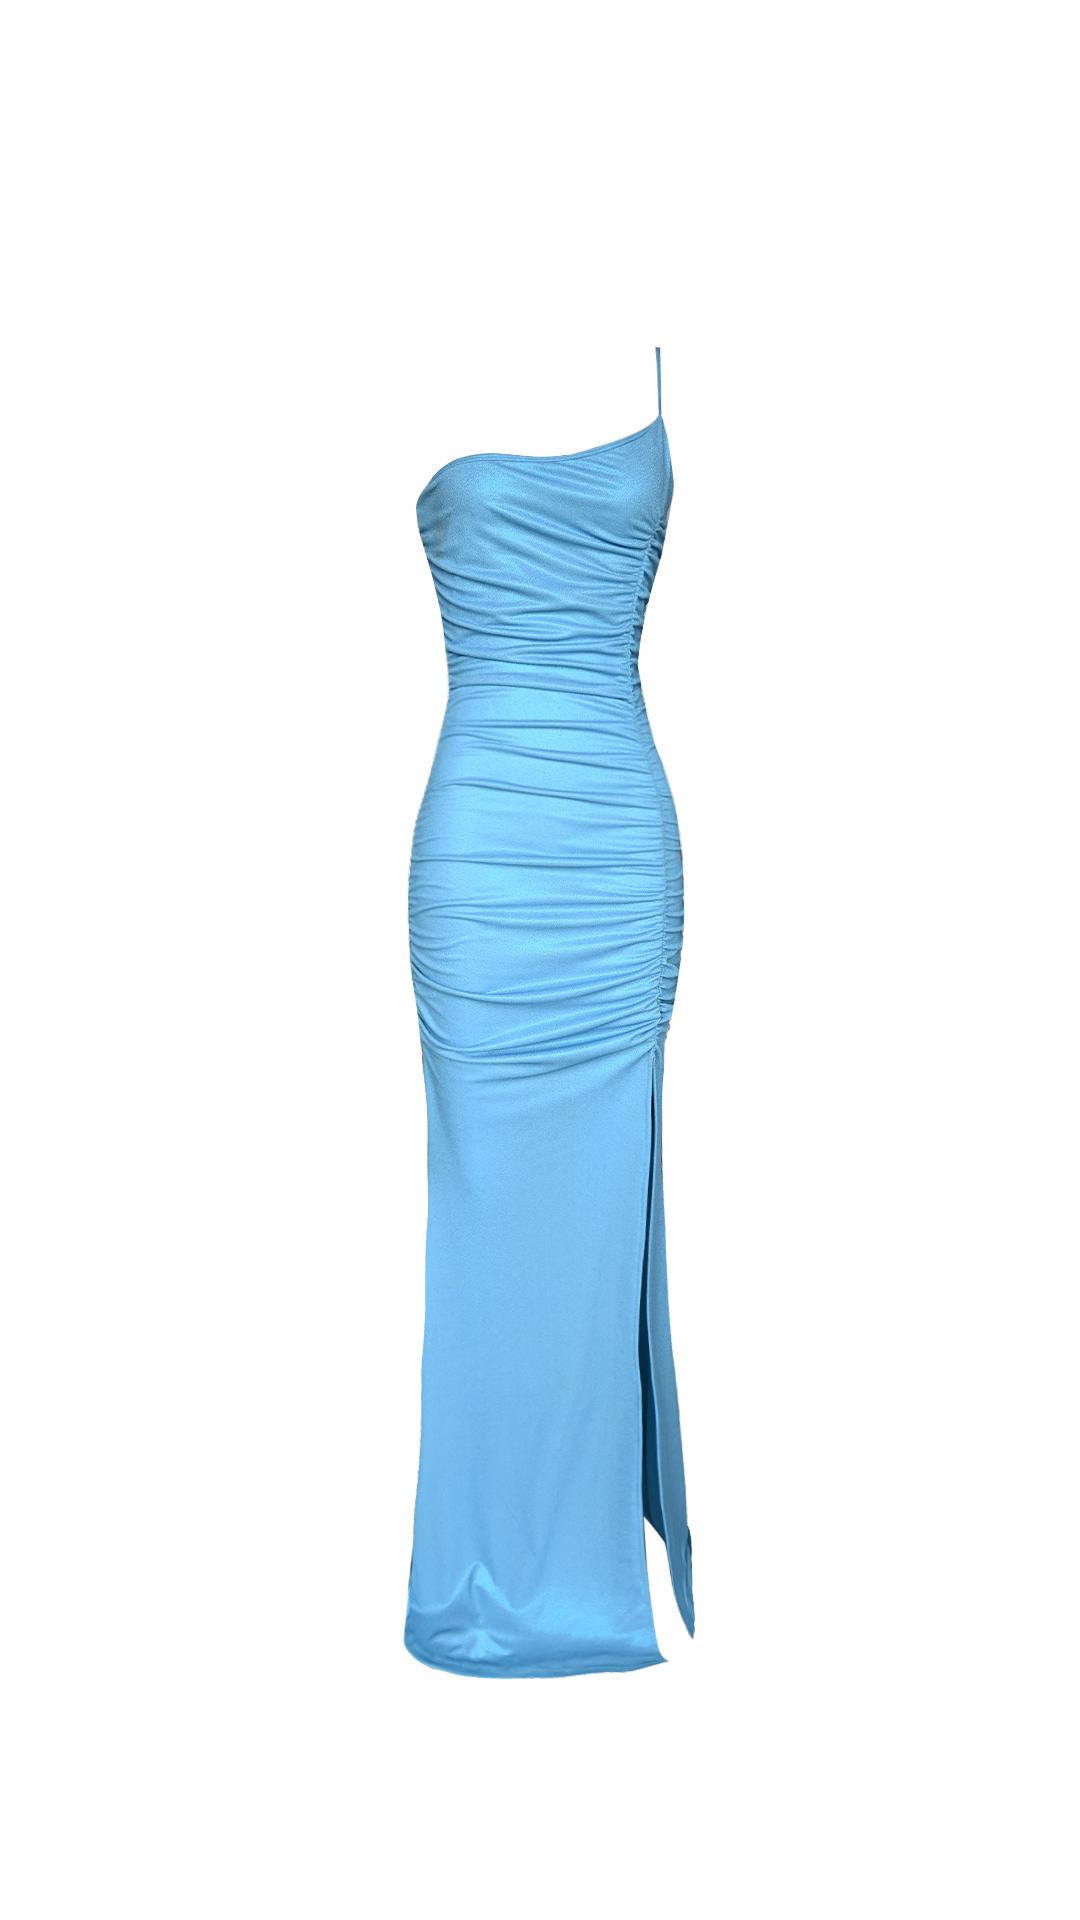 Erilda Turquoise Dress